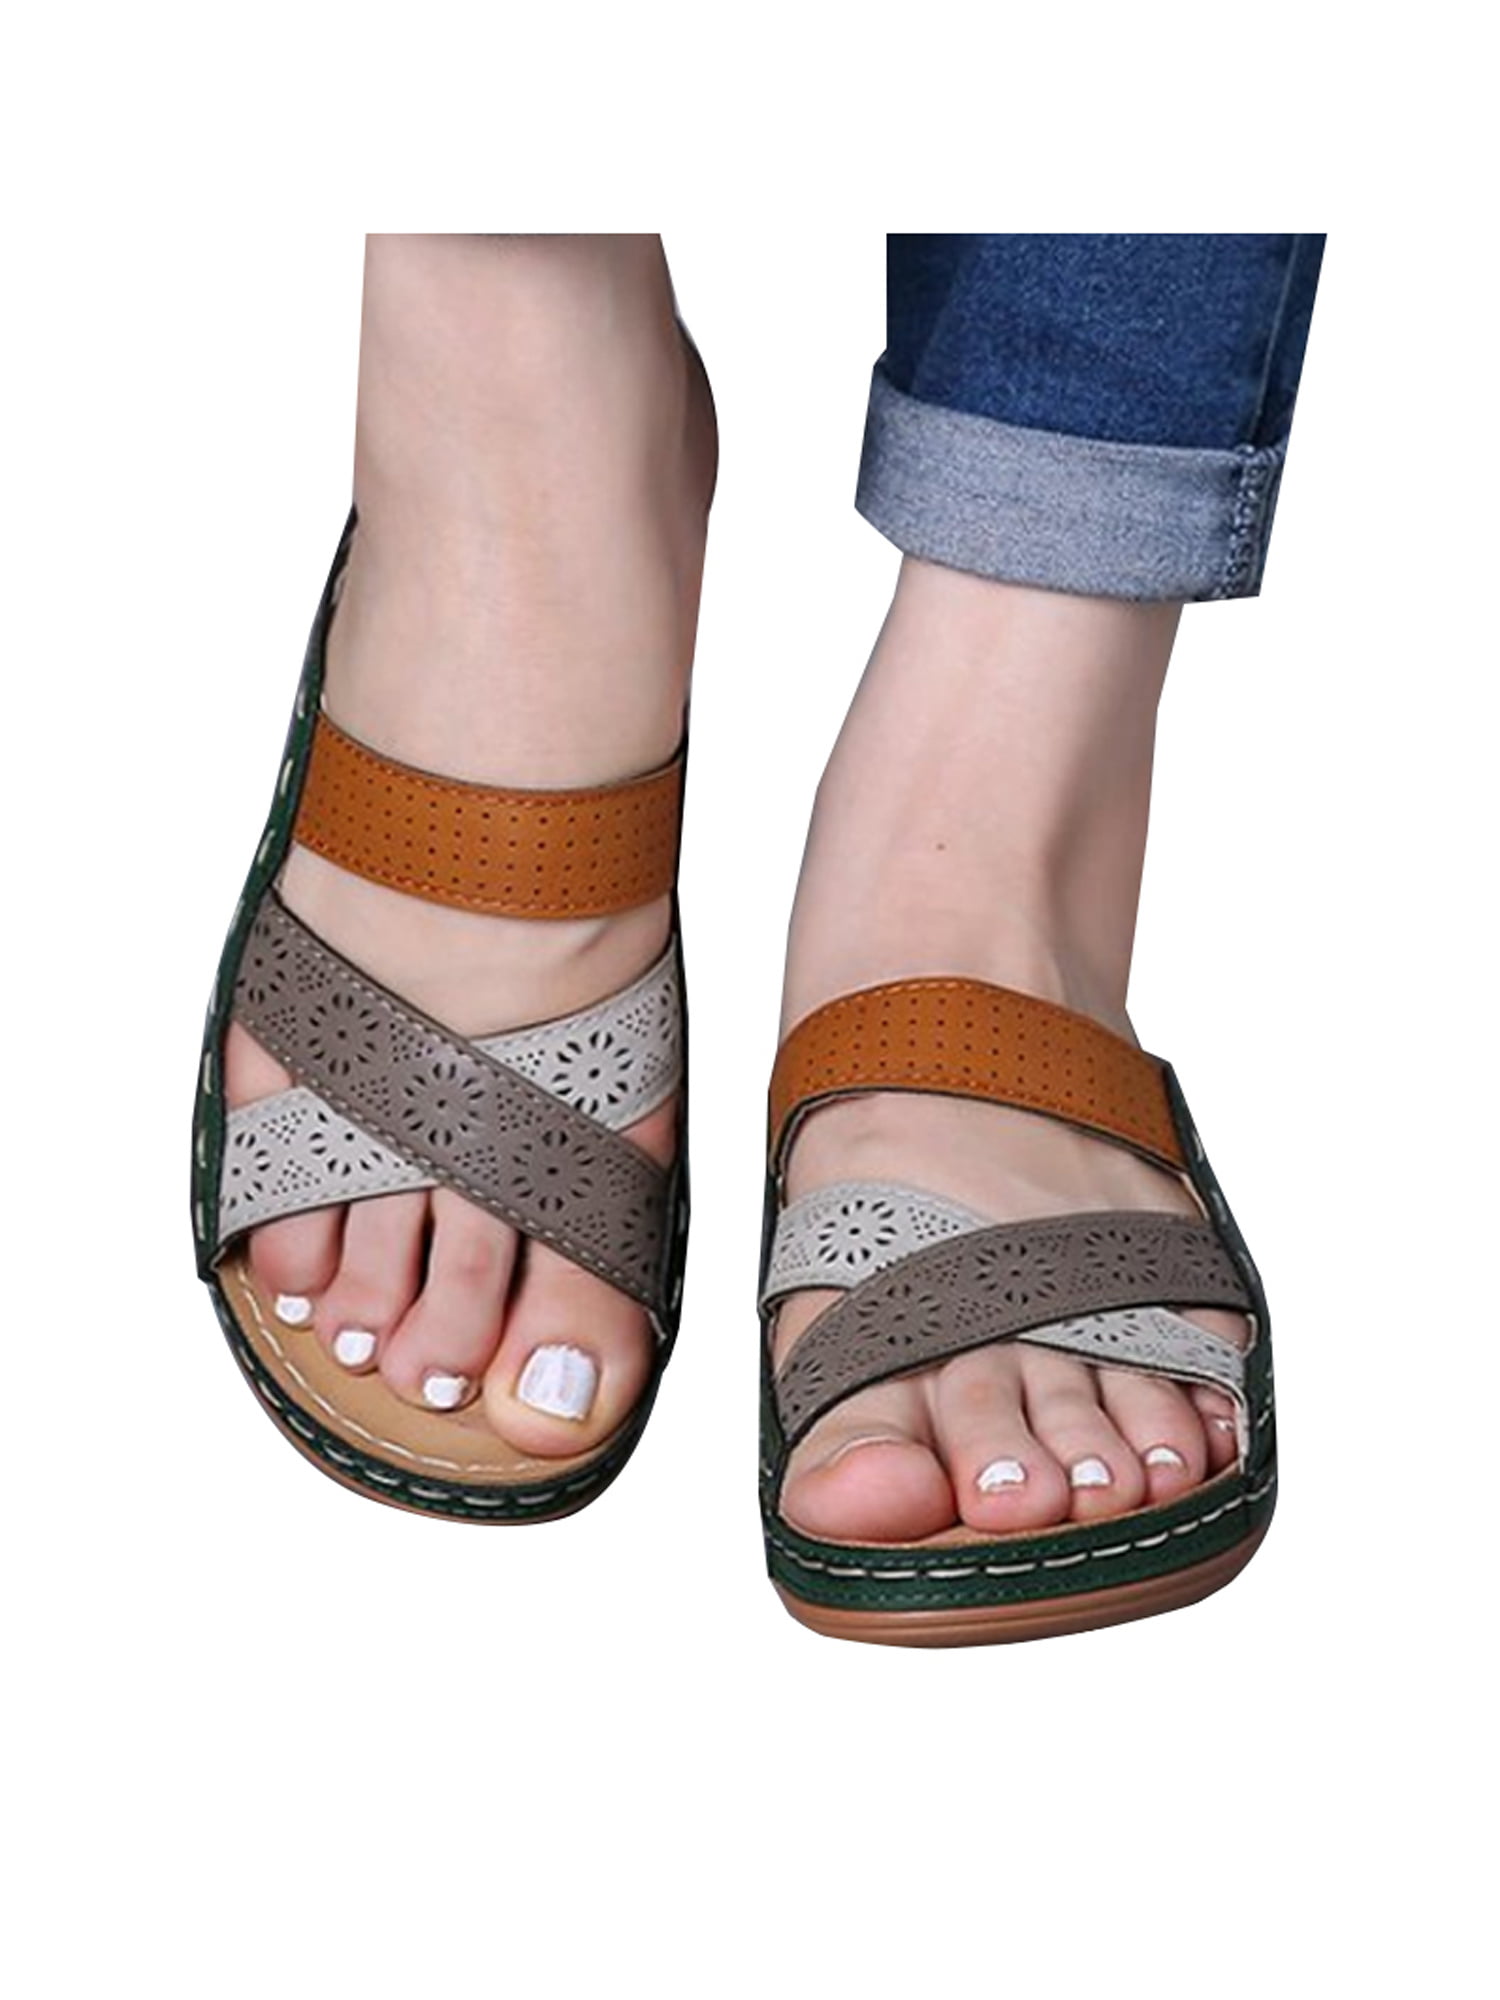 Flat Sandals Women Hot Fashion Open Toe Flip Flops Slides Slip On Beach Shoes,Black,6.5